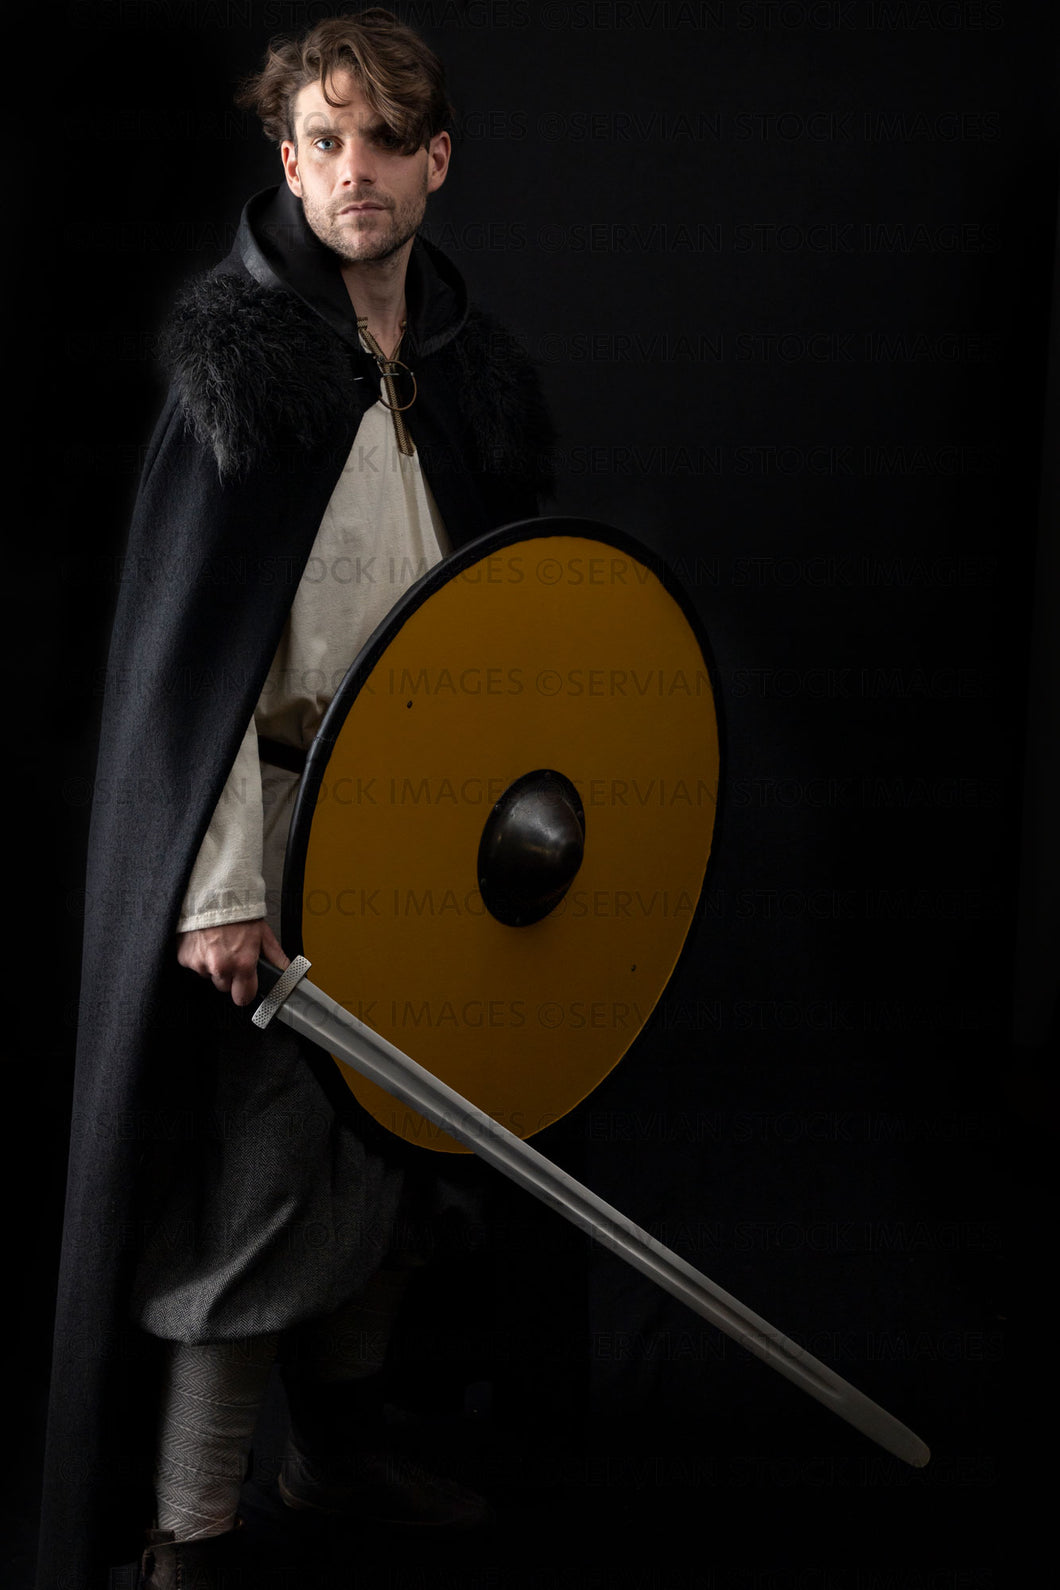 Viking or high fantasy man against a black backdrop (James 1004)